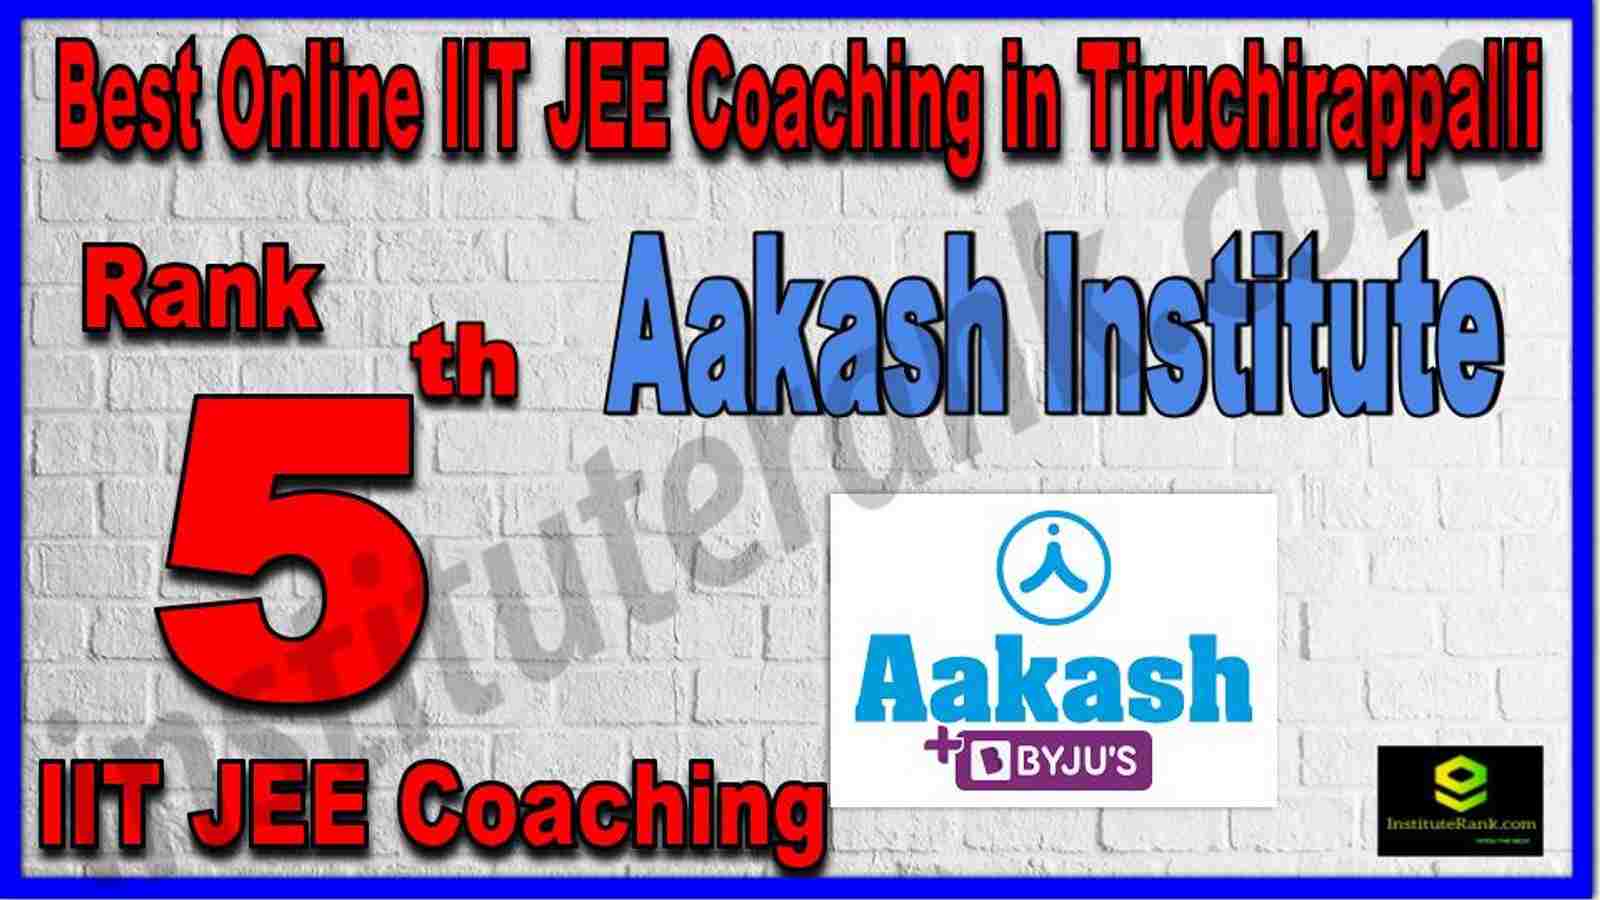 Rank 5th Best Online IIT JEE Coaching in Tiruchirappalli